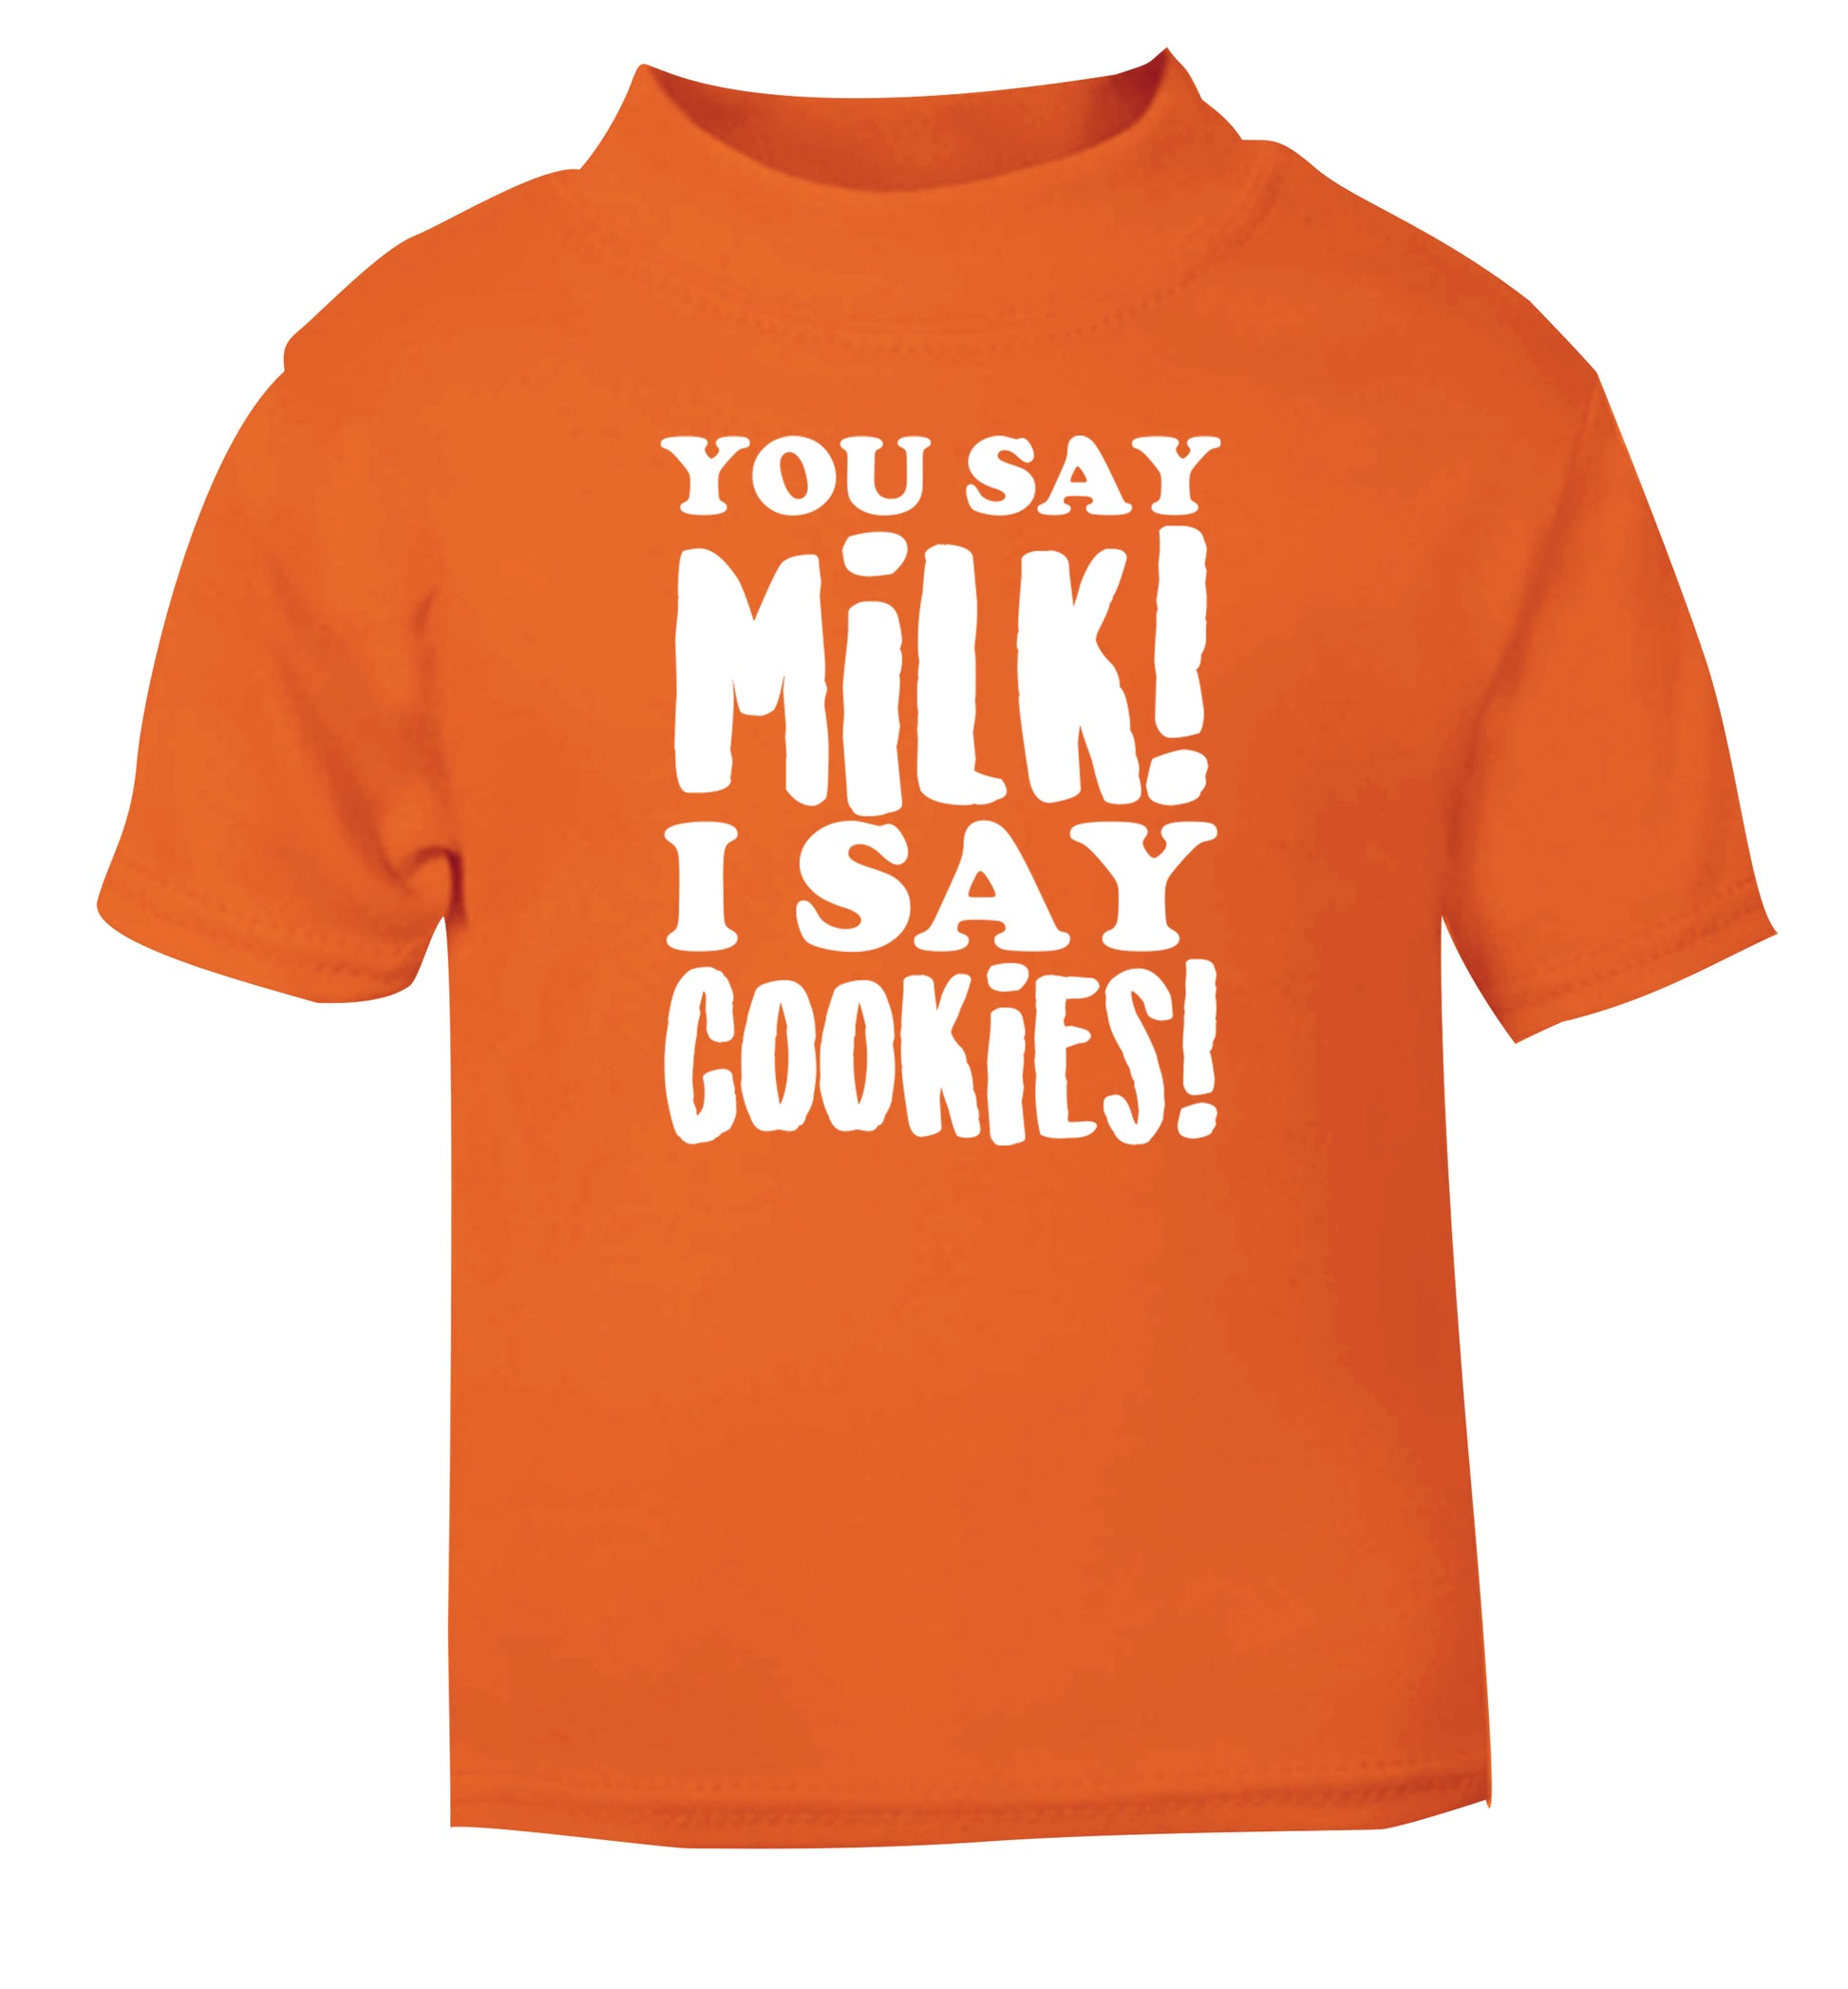 You say milk I say cookies! orange Baby Toddler Tshirt 2 Years